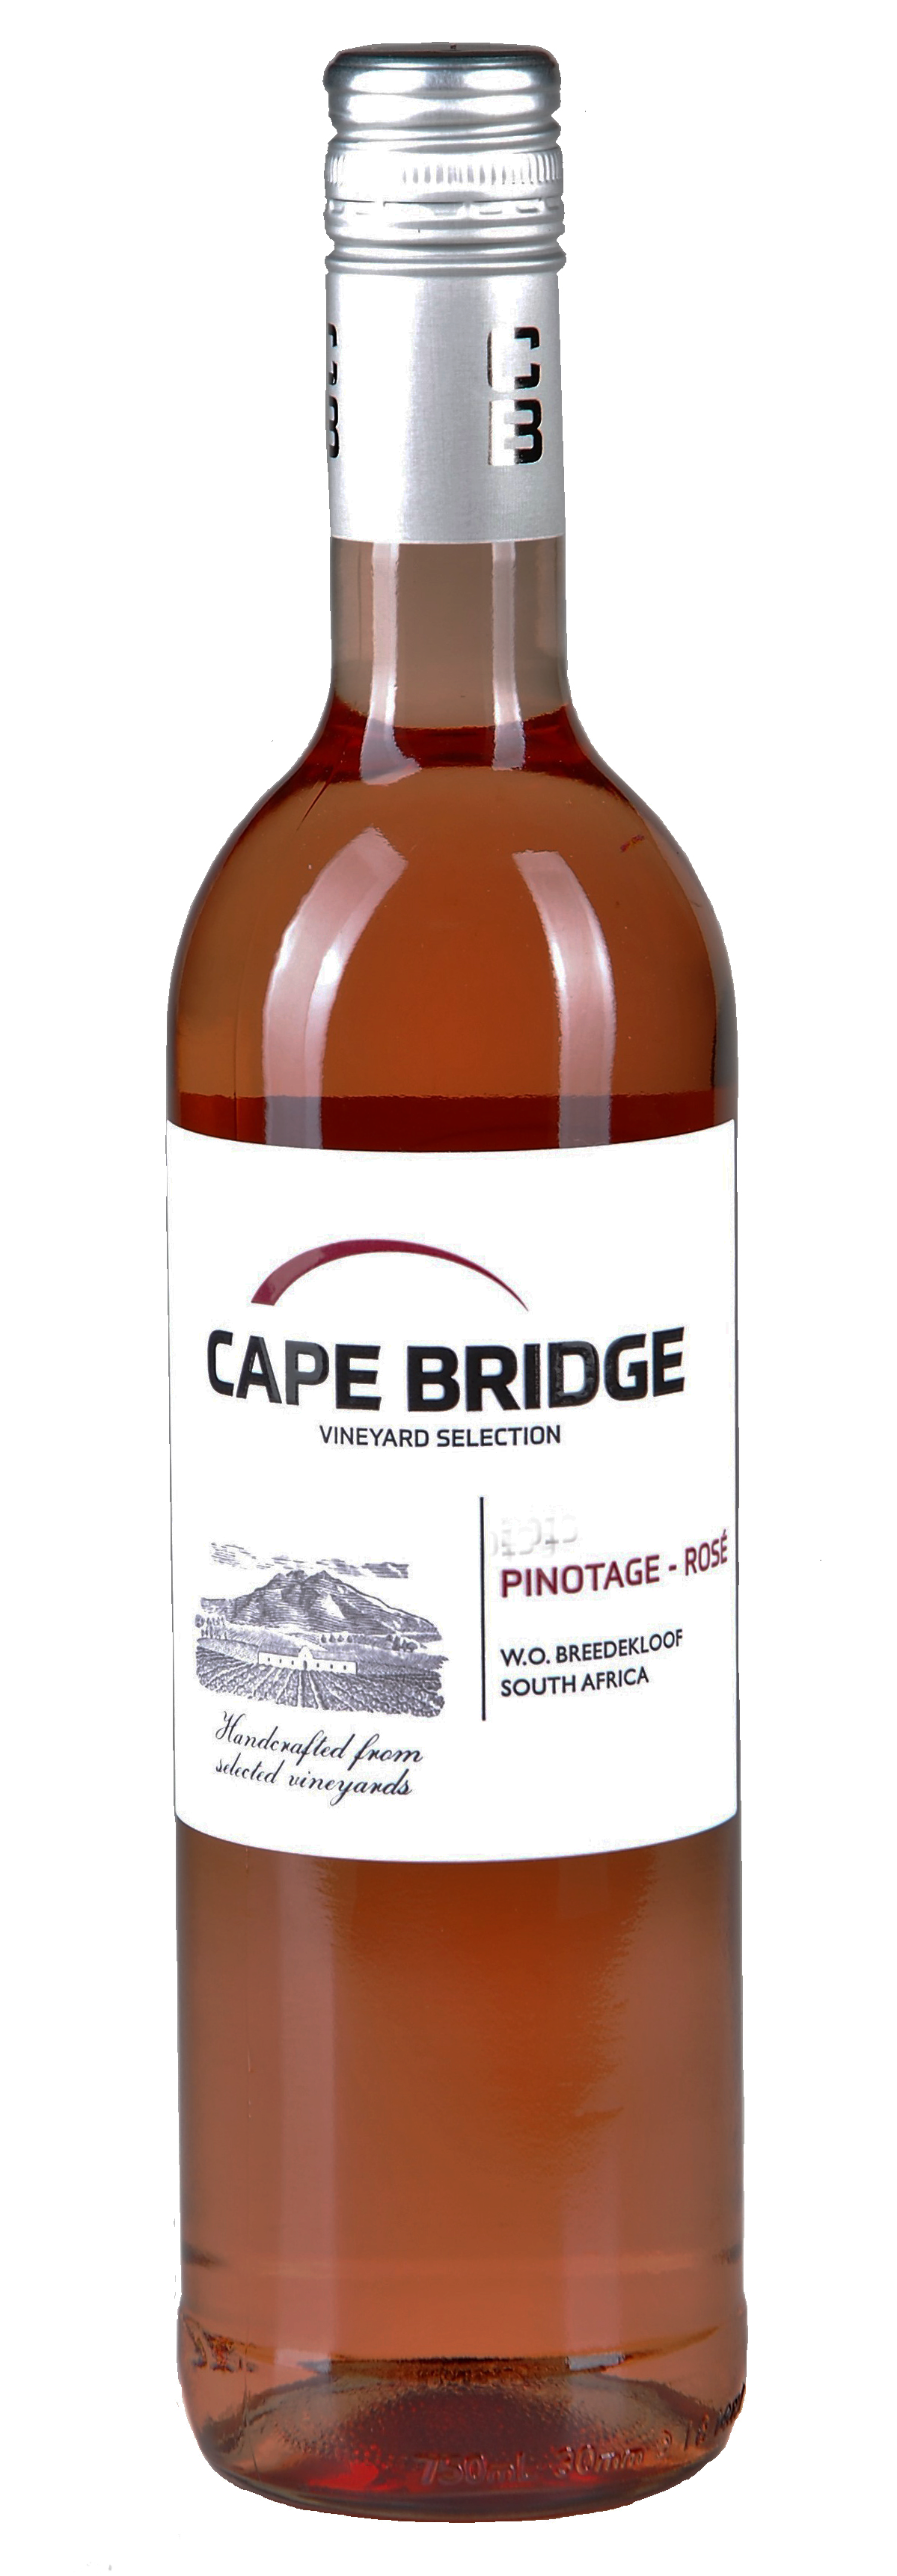 Cape Bridge Rosé Pinotage Coastel Region